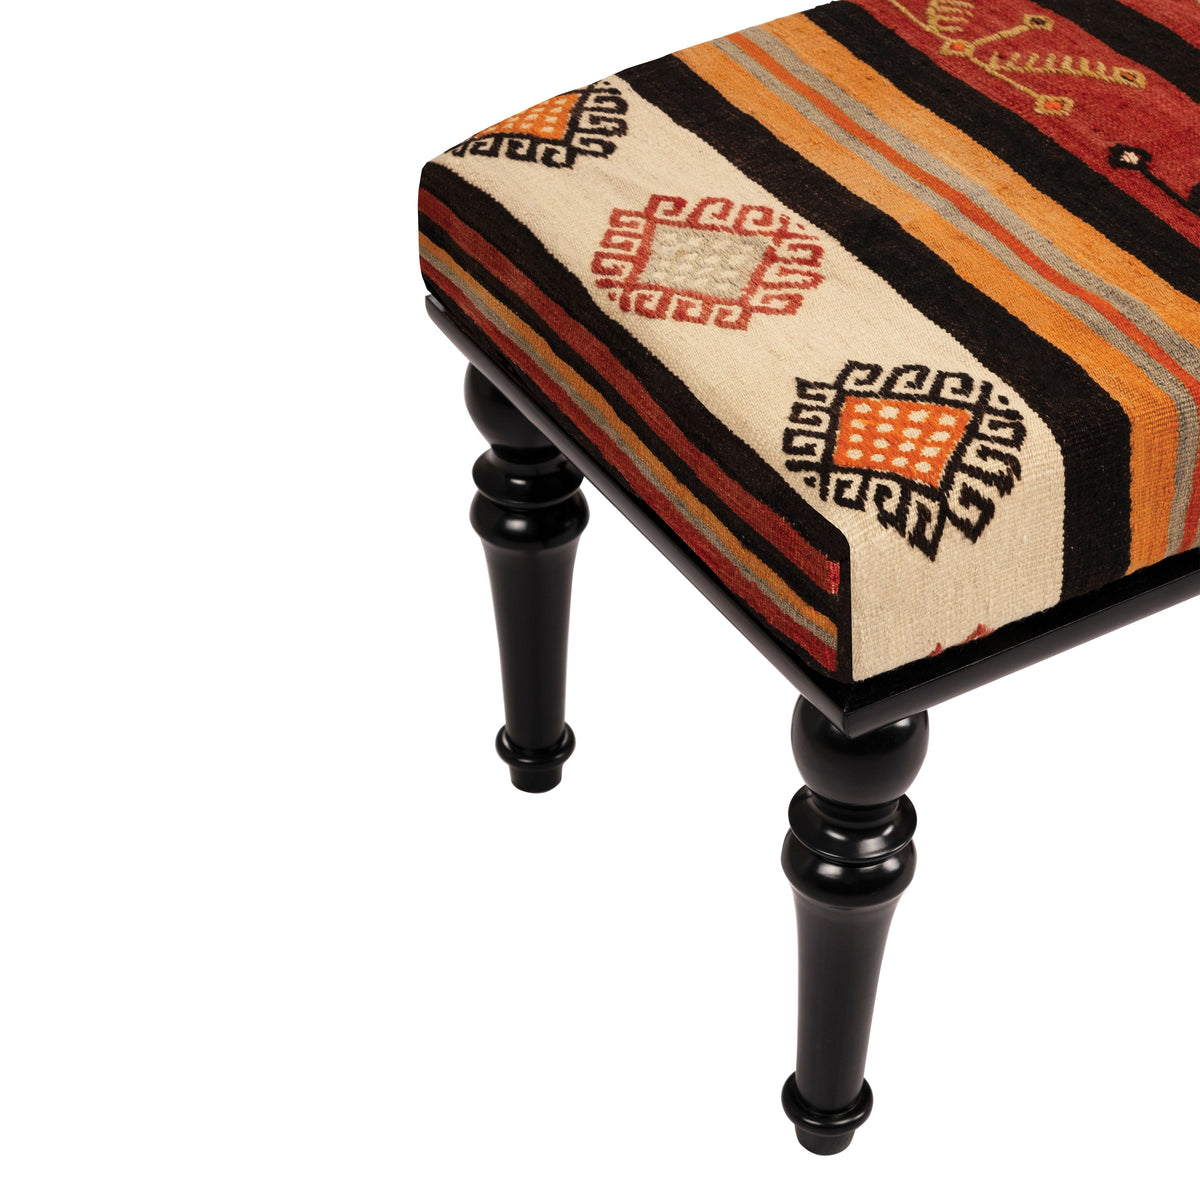 Handmade Vintage Bench - Ottoman